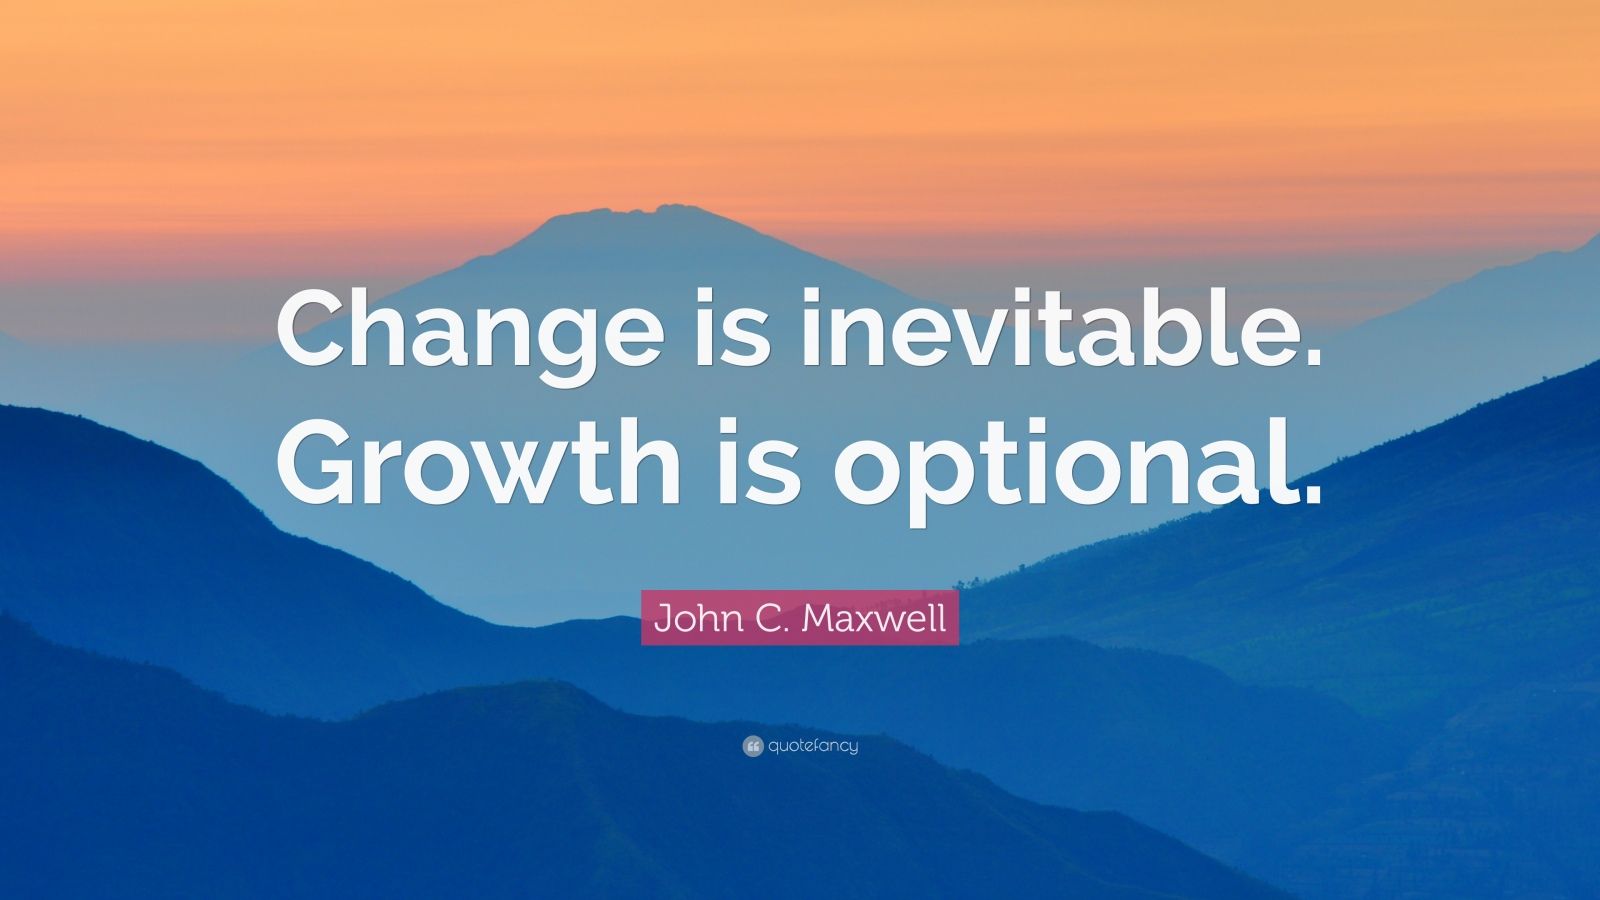 John C. Maxwell Quote: “Change is inevitable. Growth is optional.” (22